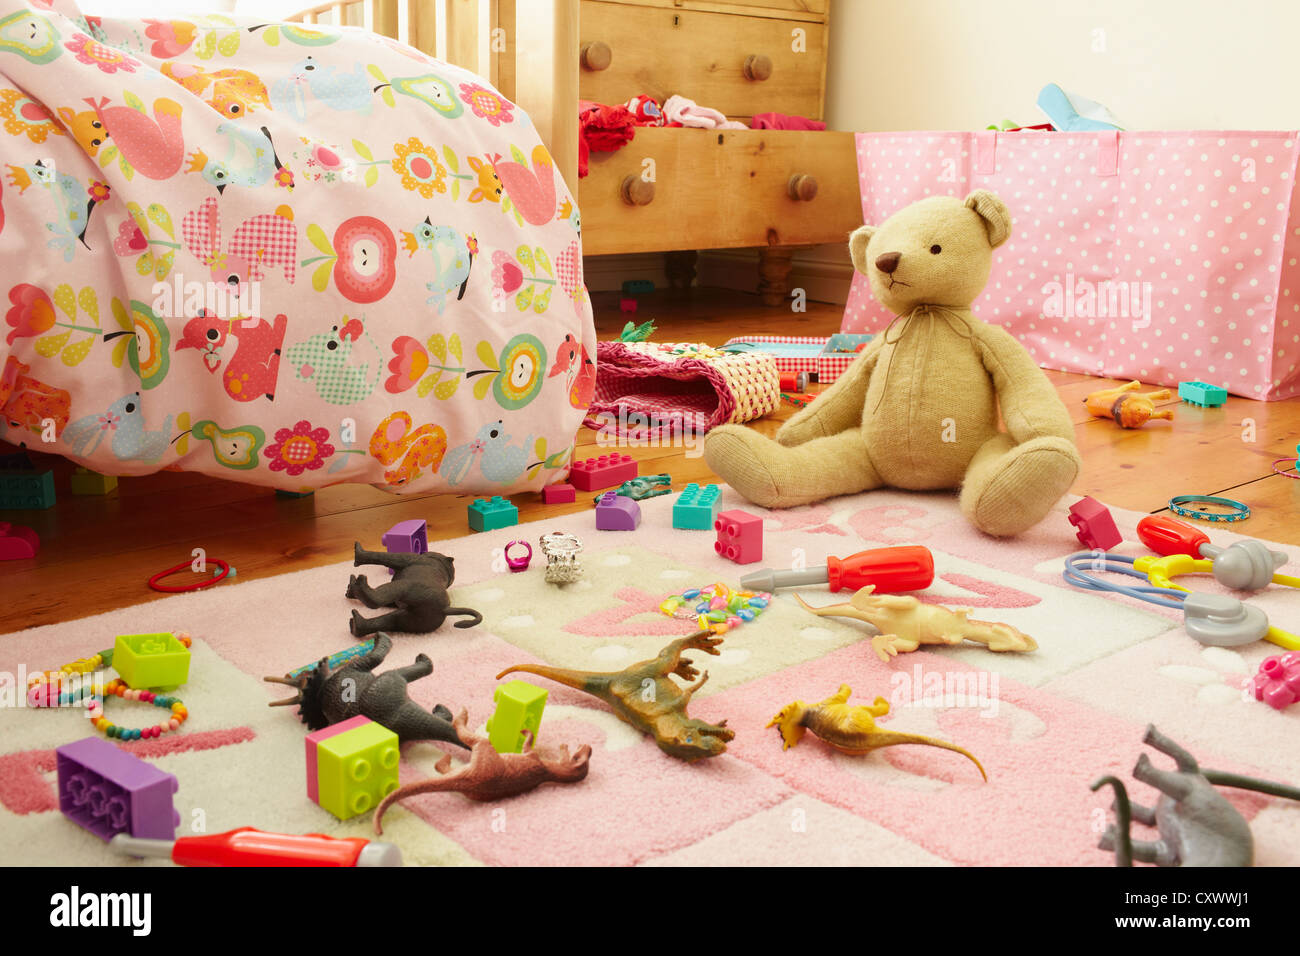 toys in bedroom